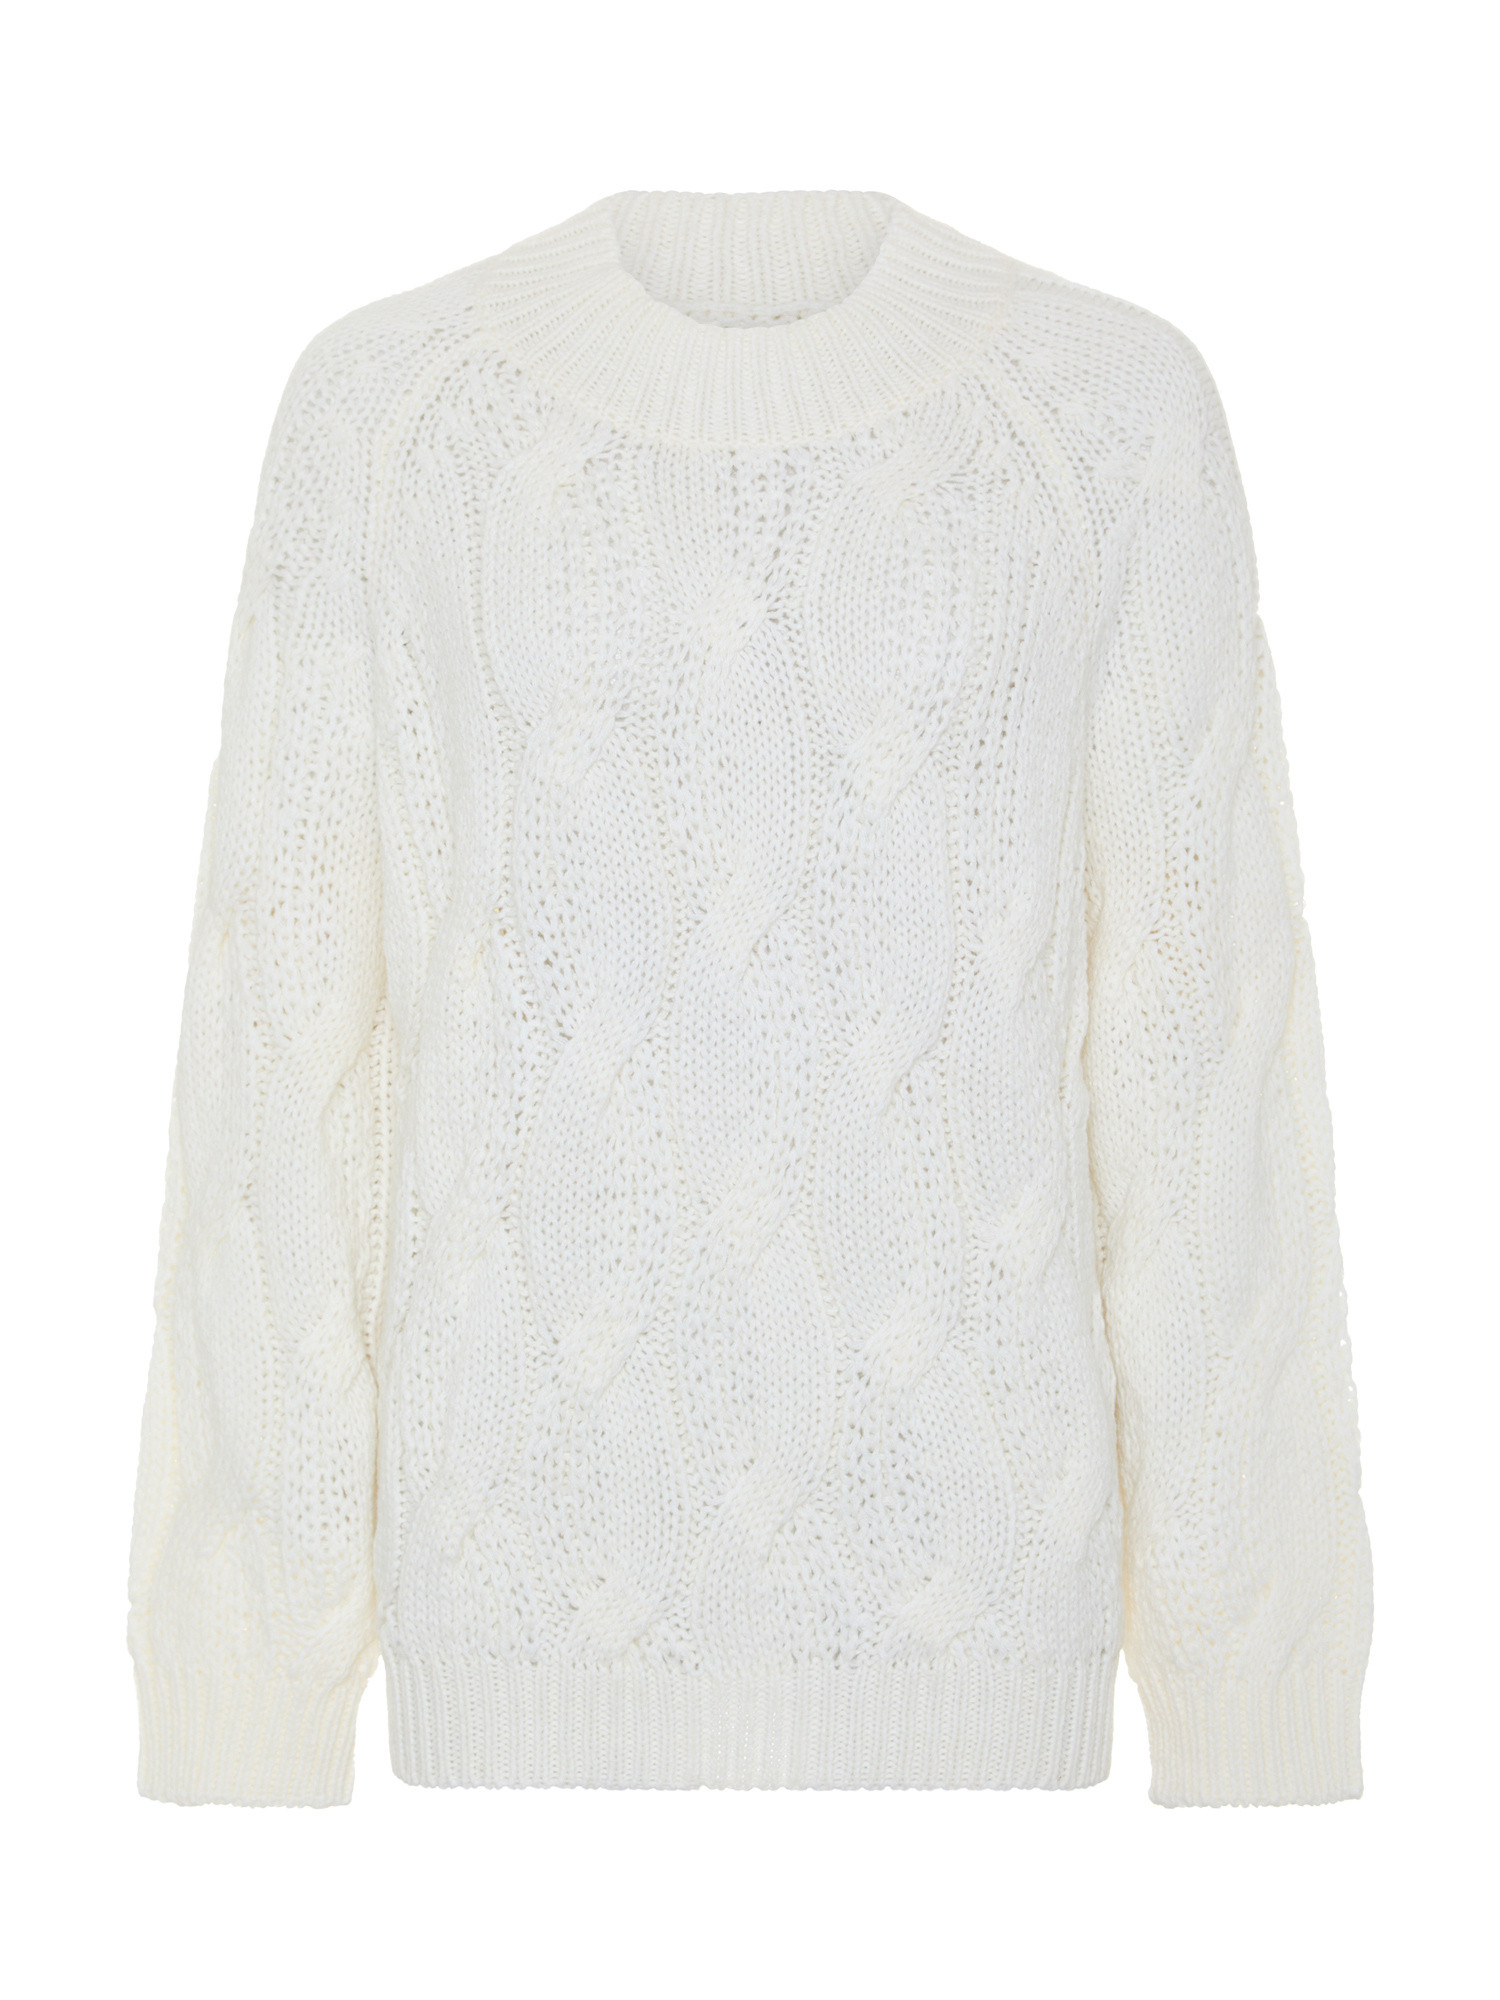 Koan - Crewneck sweater with braid motif, White Cream, large image number 0